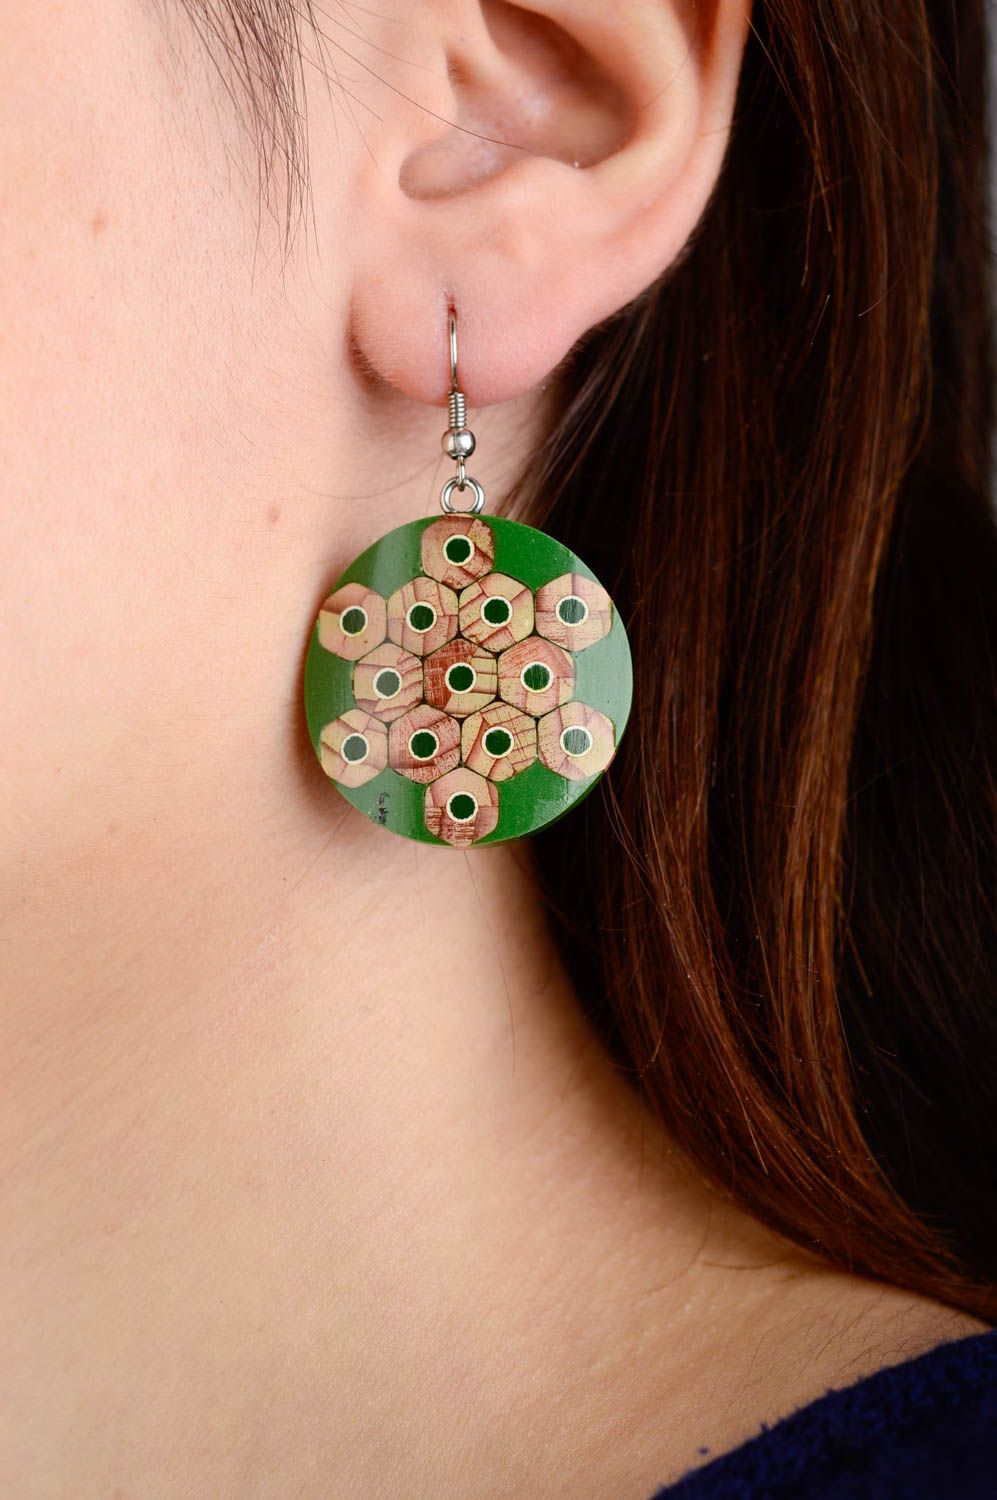 Wood jewelry designer earrings handmade earrings with charms modern accessory photo 5